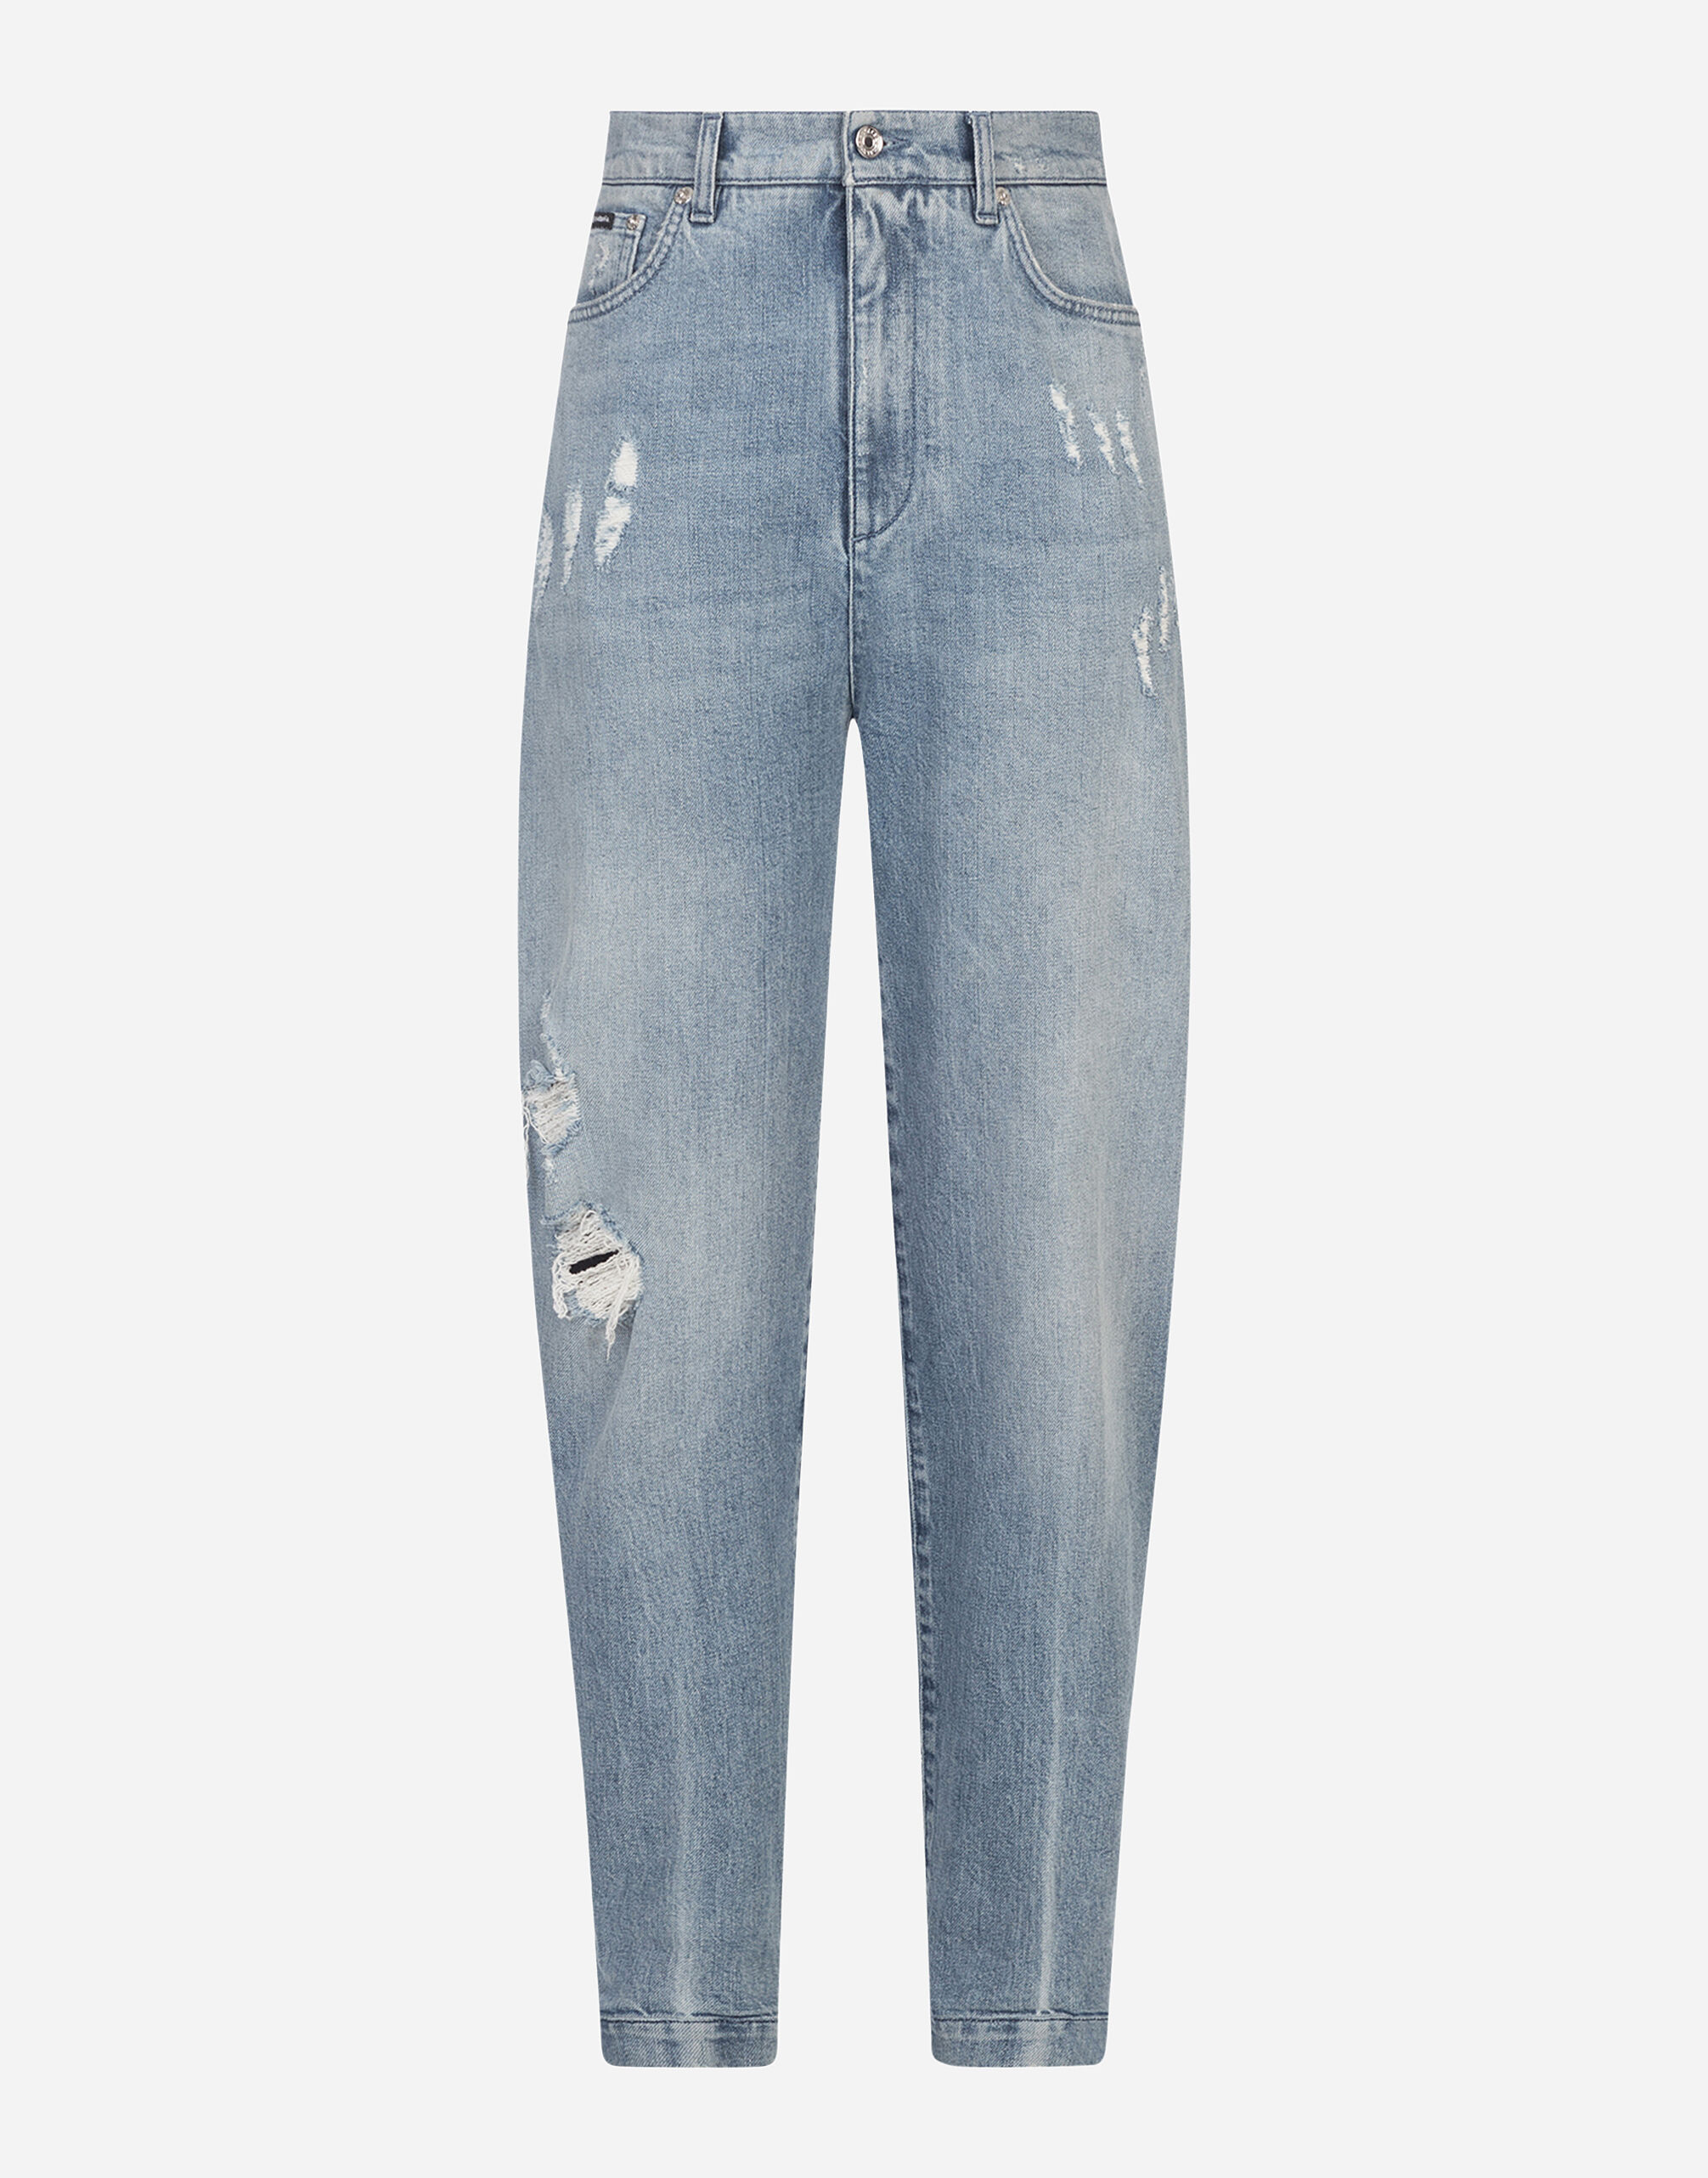 Dolce & Gabbana Boyfriend jeans in light blue denim with rips Blue F9R74DG8KT0